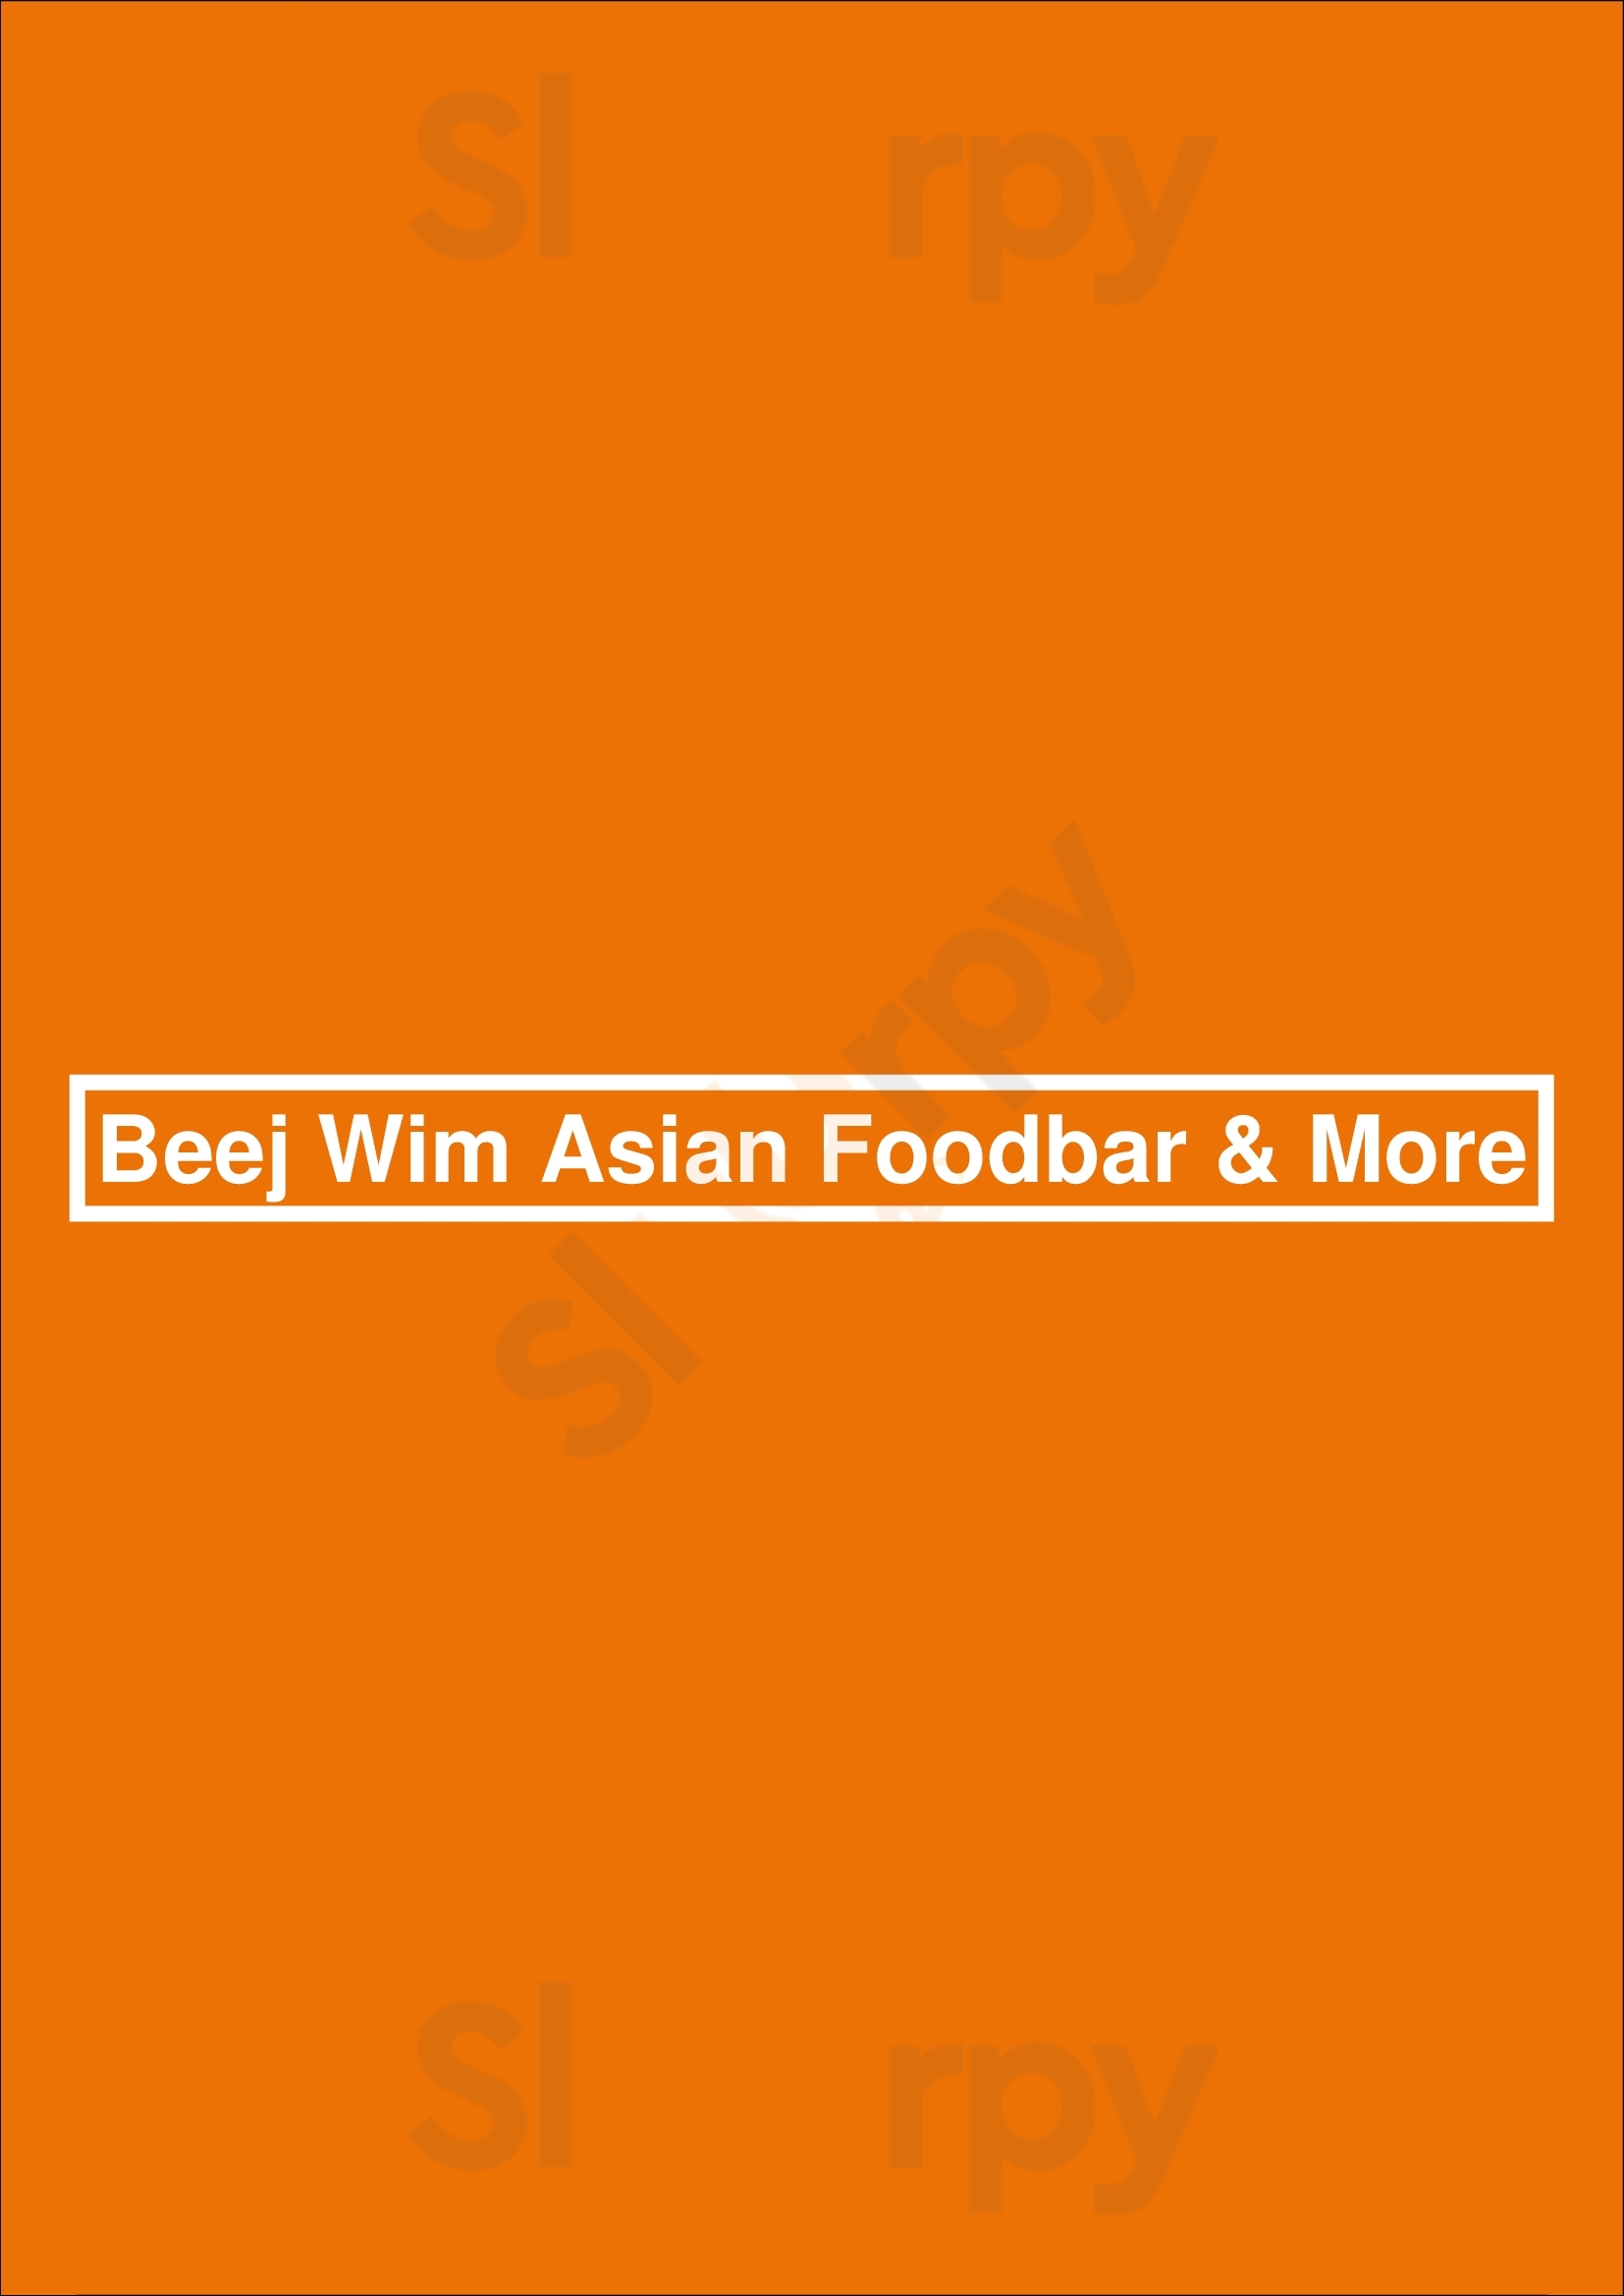 Beej Wim Asian Foodbar & More Venlo Menu - 1